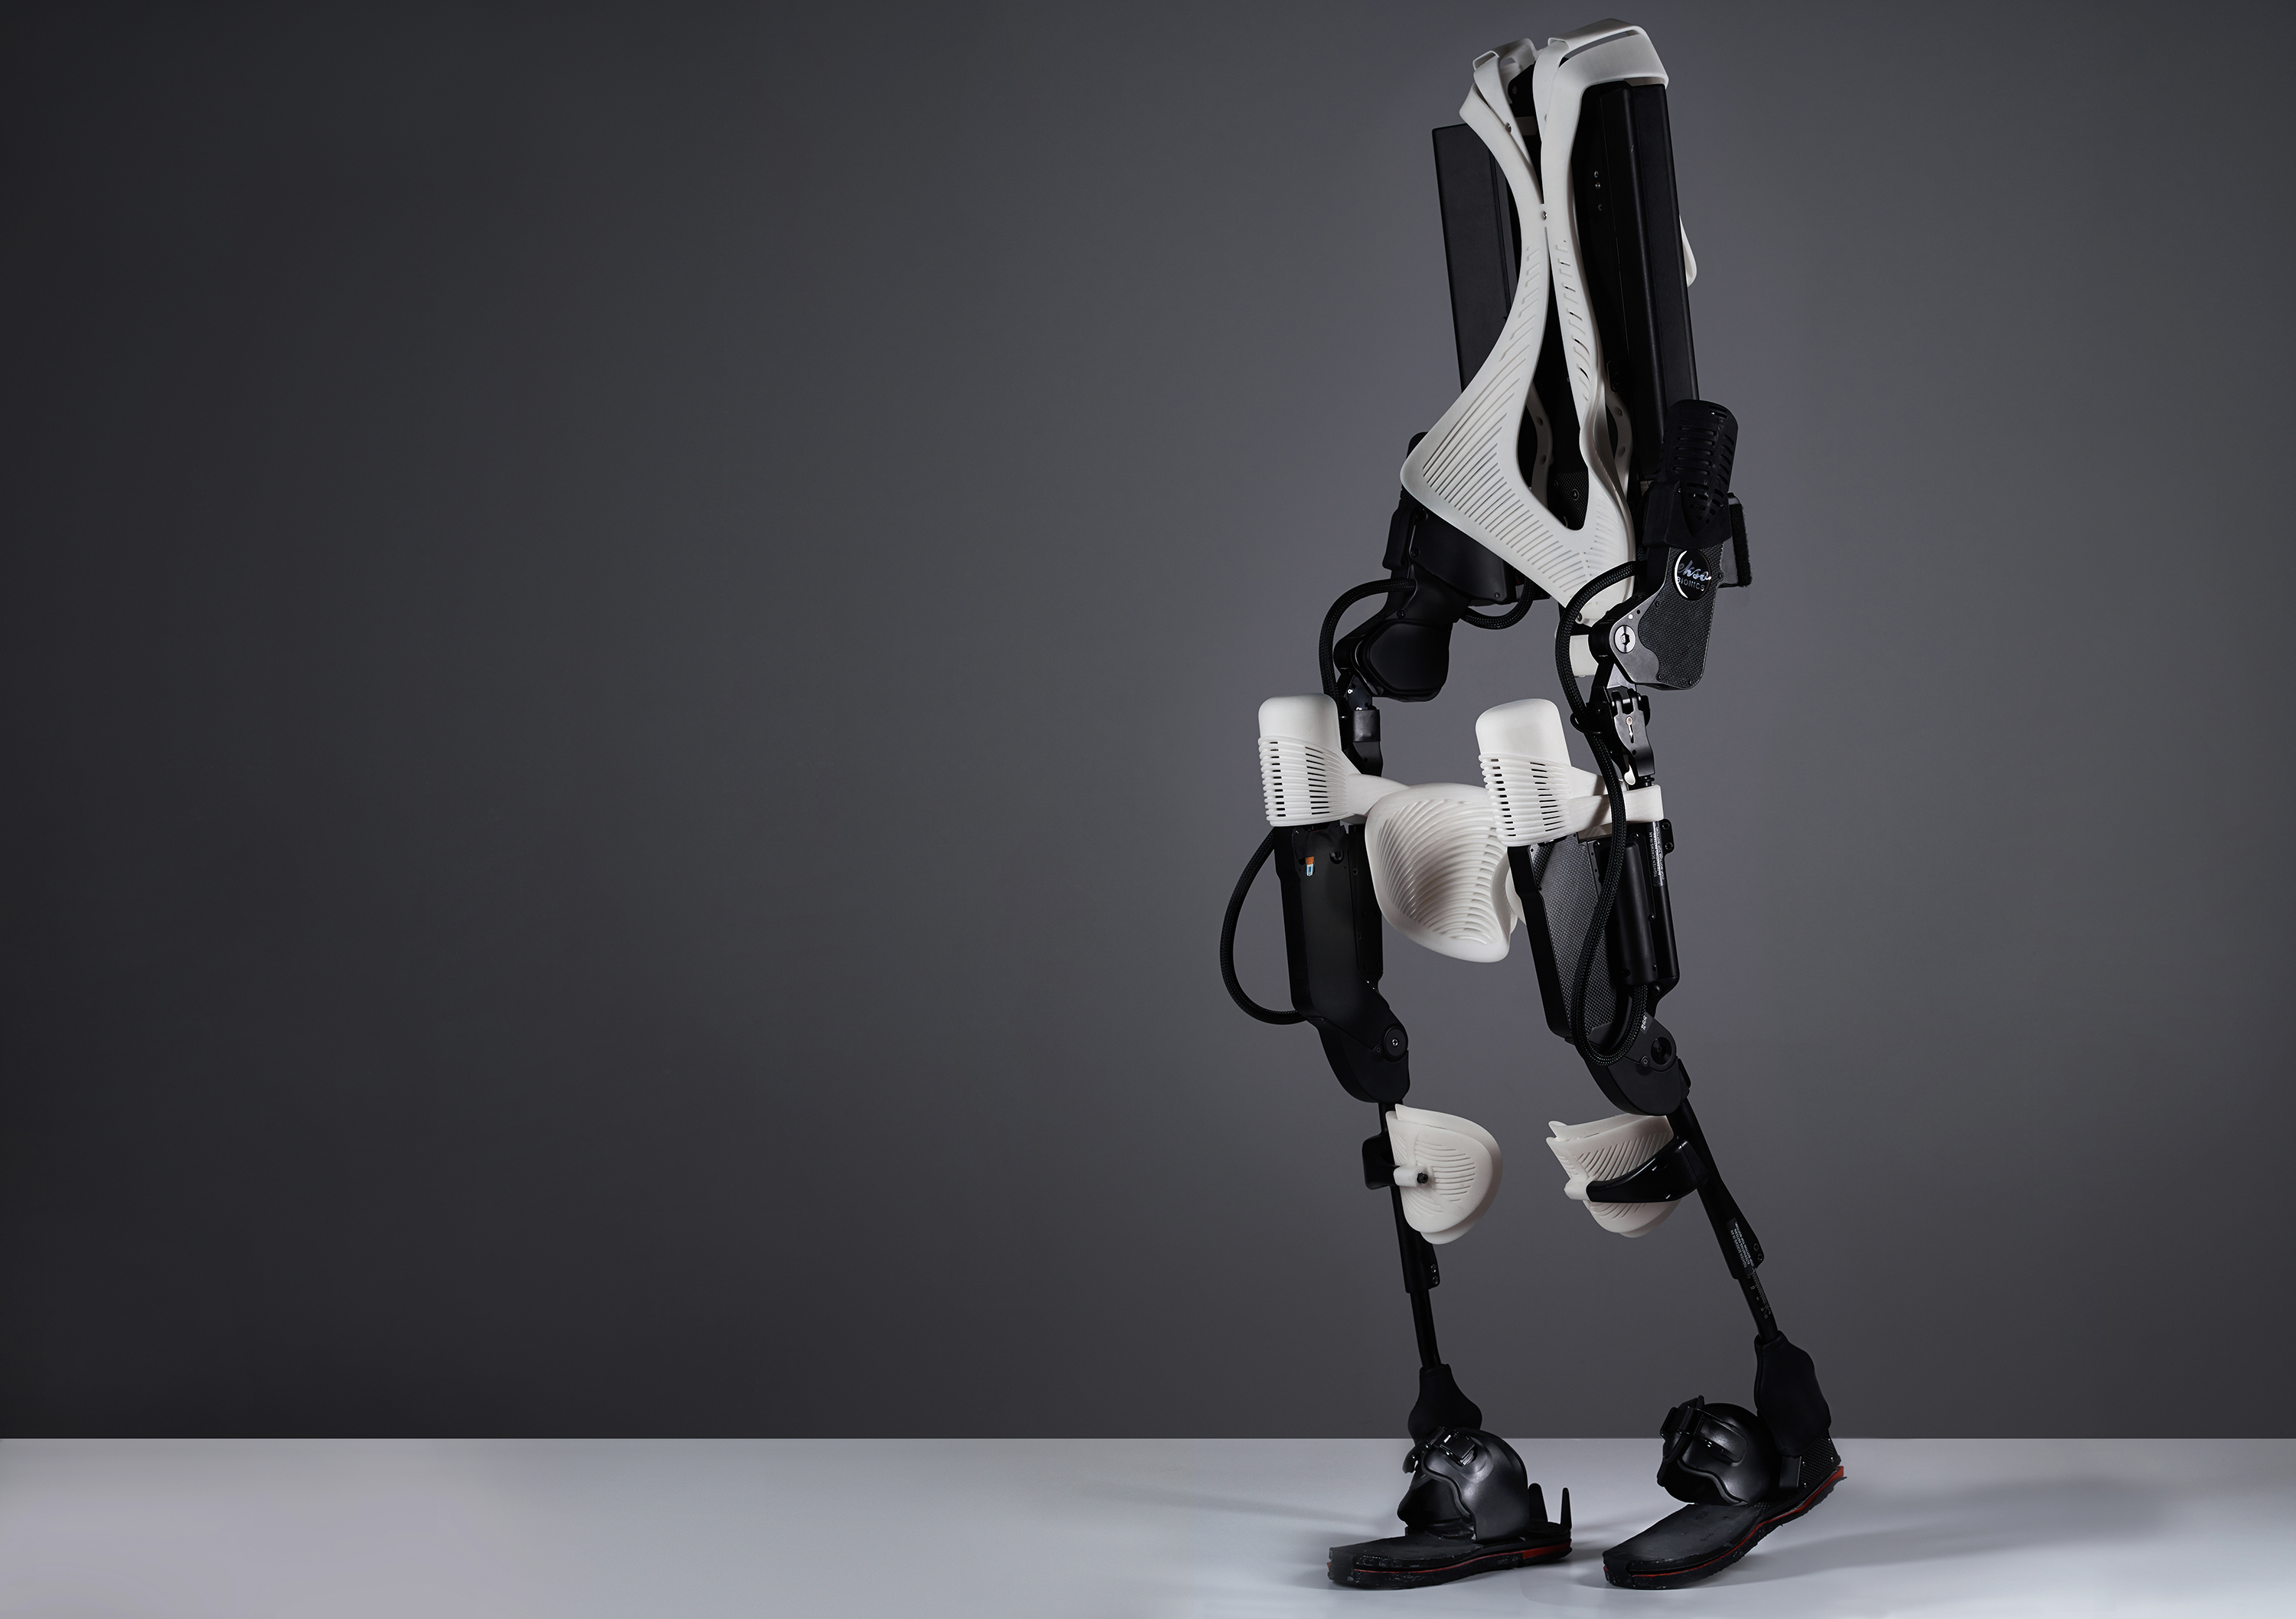 Vodafone provide connectivity for Robotic Exoskeleton